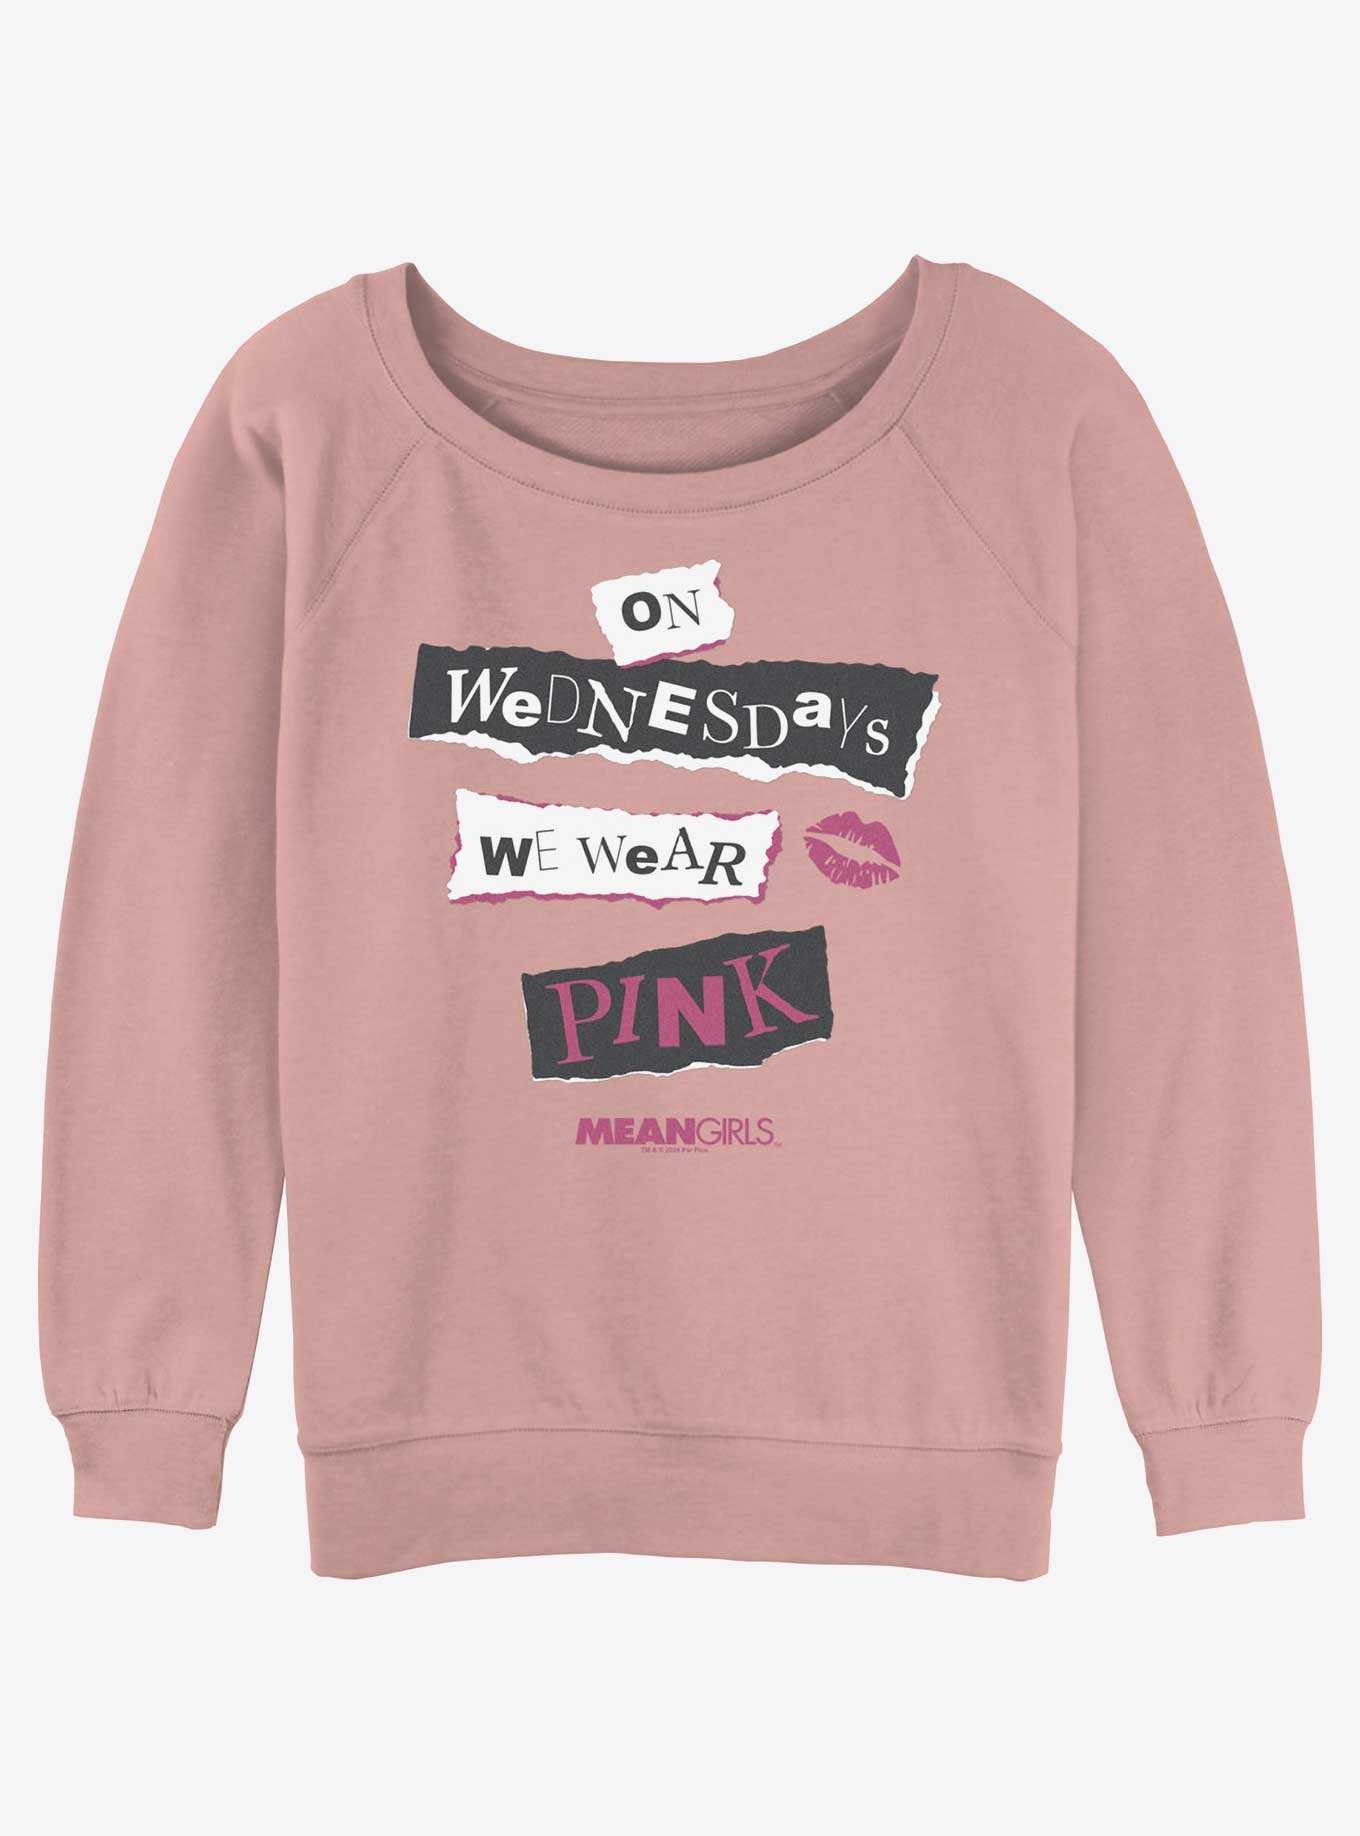 Mean Girls Pink Cool Mom Sweatshirt £18 @ Argos / Tu Clothing